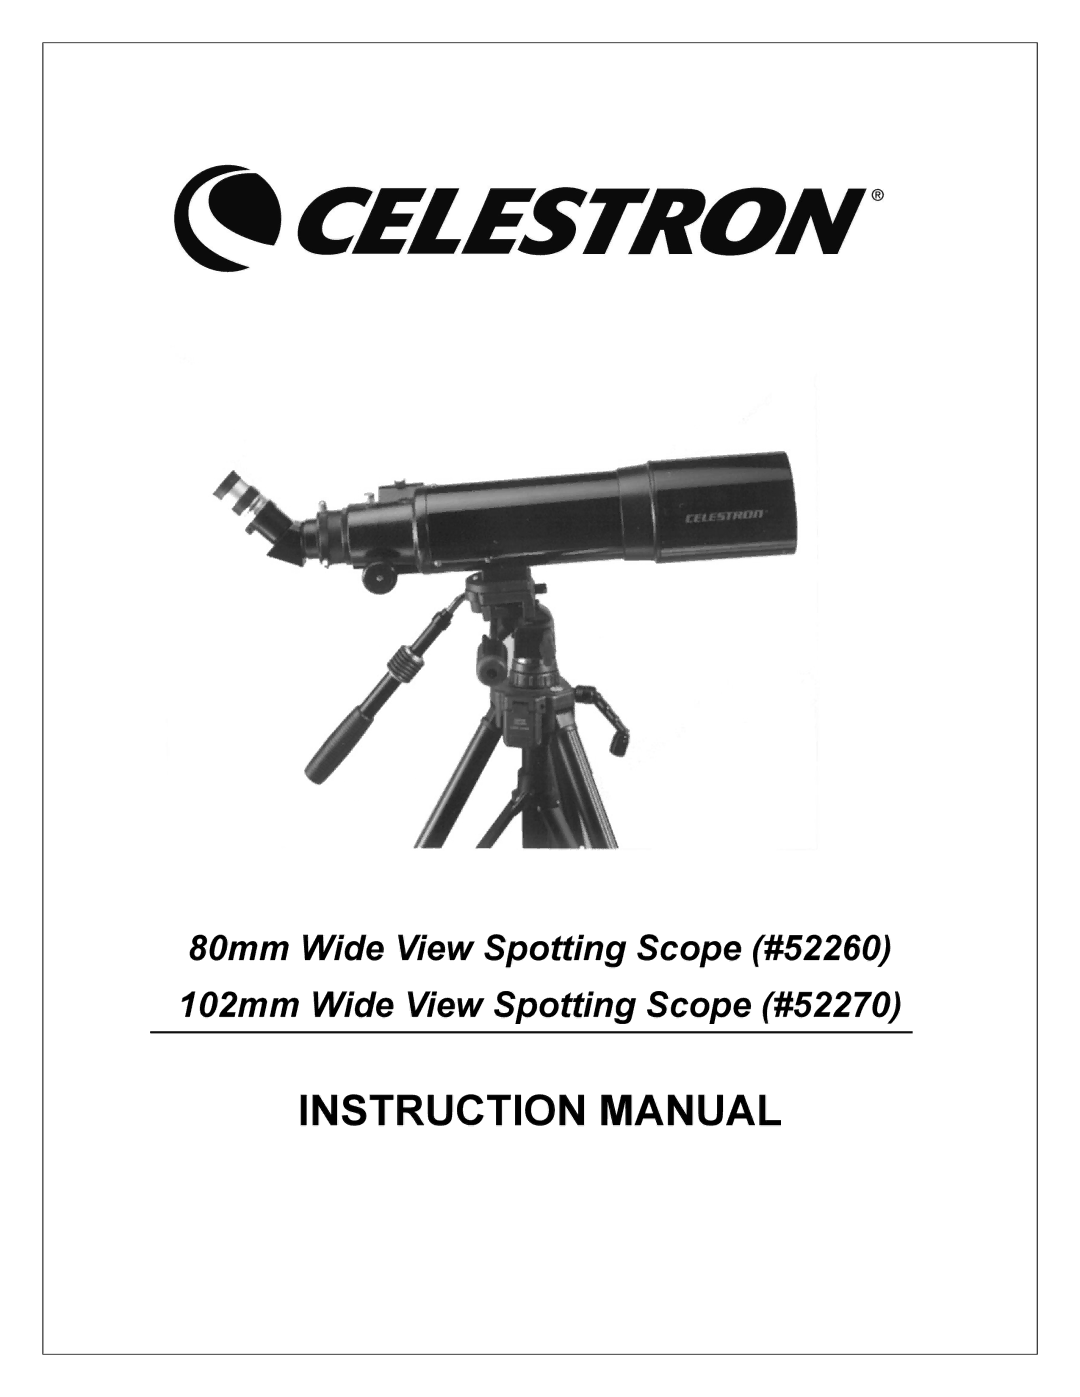 Celestron 52270, 52260 instruction manual 